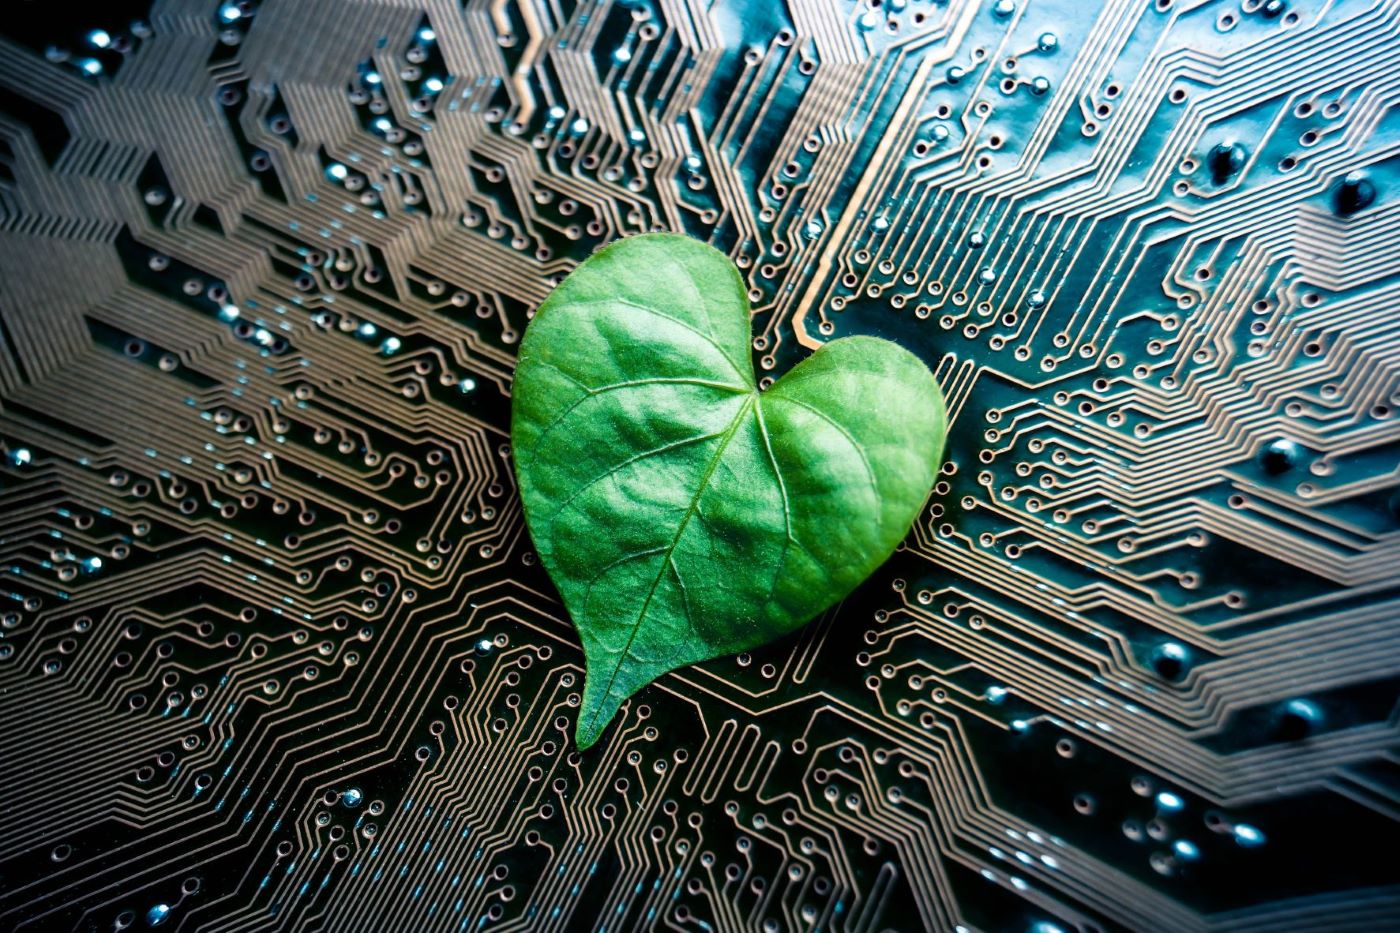 leaf in midst of circut board